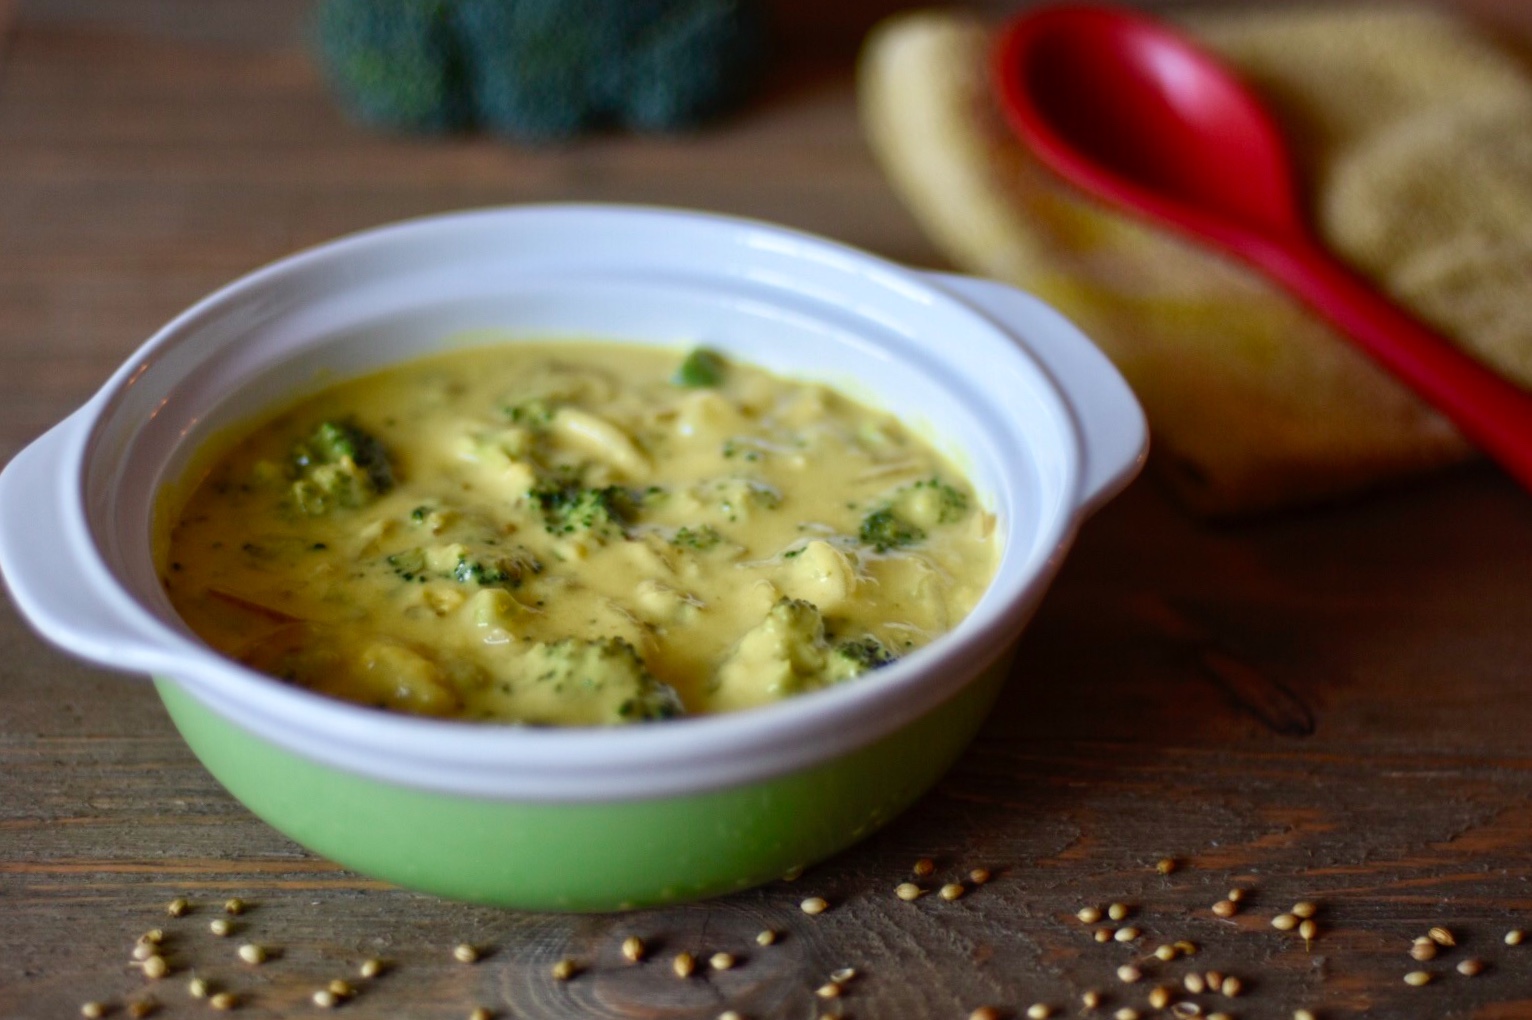 Broccoli kadhi / Broccoli in yogurt sauce / Indian style Broccoli curry